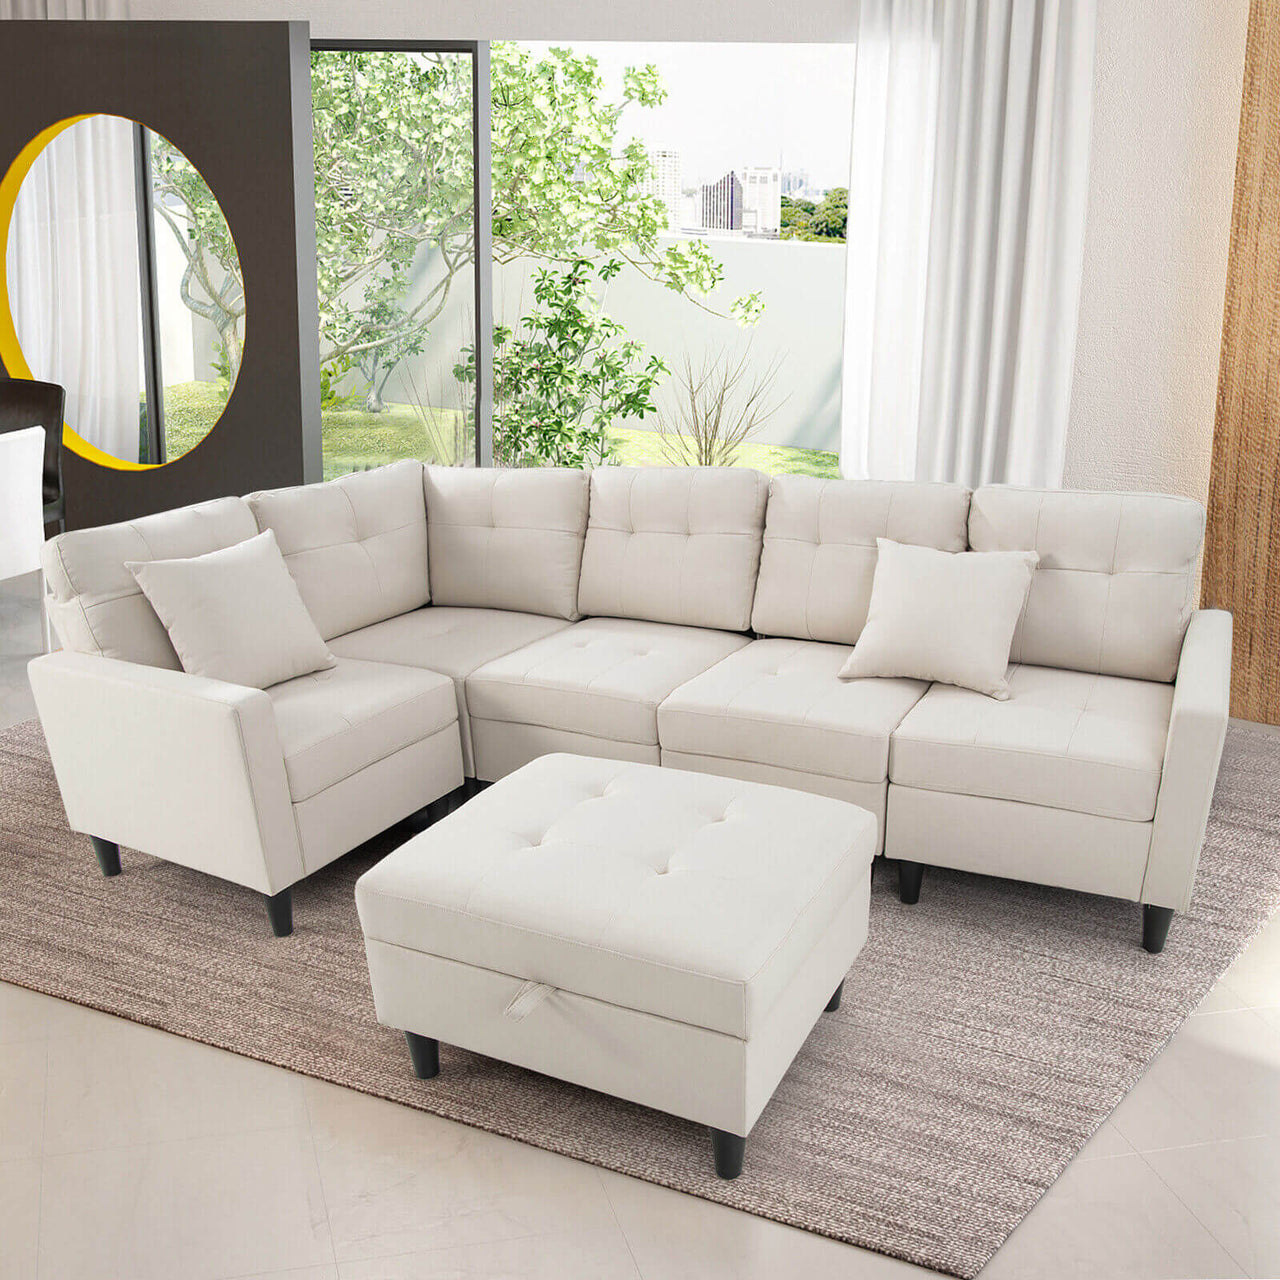 L-shaped Sectional Corner Sofa Set with Storage Ottoman